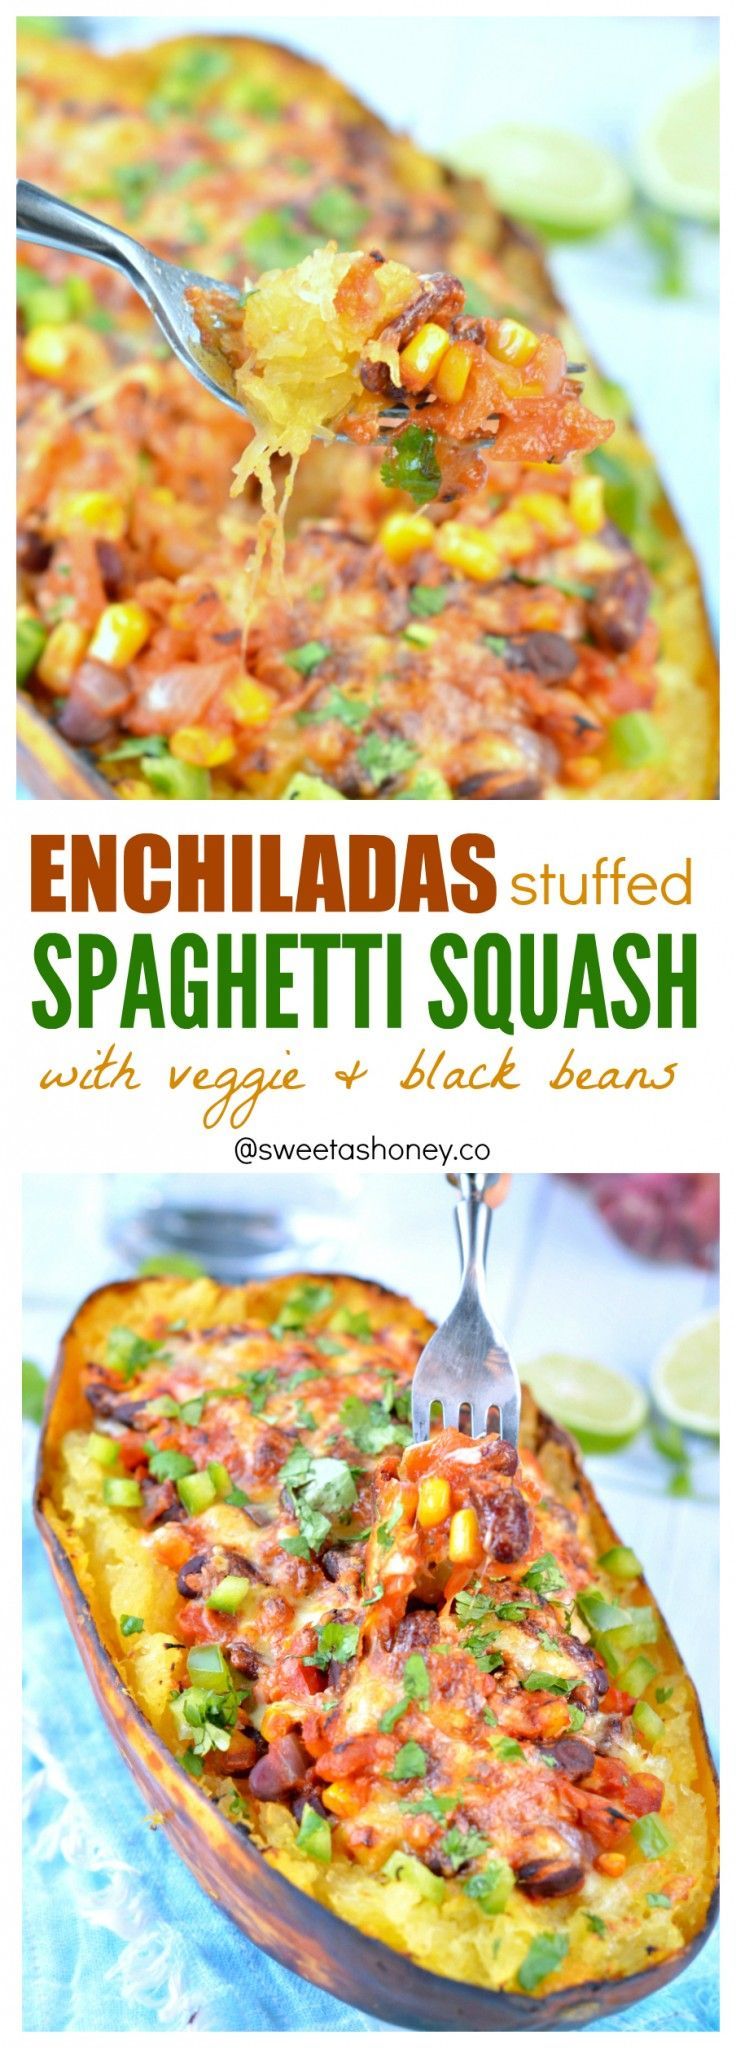 Vegetarian enchiladas stuffed spaghetti squash recipe | You won’t miss the tortillas wrap. A great easy clean eating recipe to cut